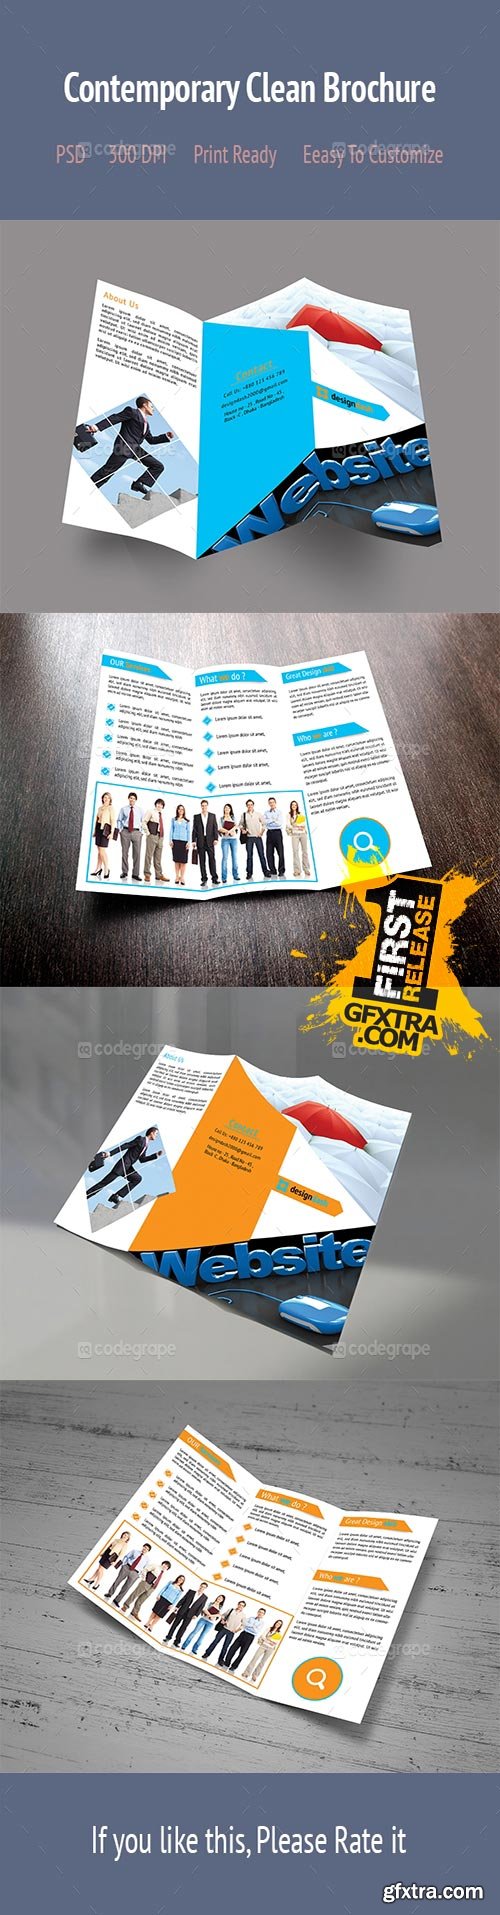 CodeGrape - Contemporary Clean Brochure 5126